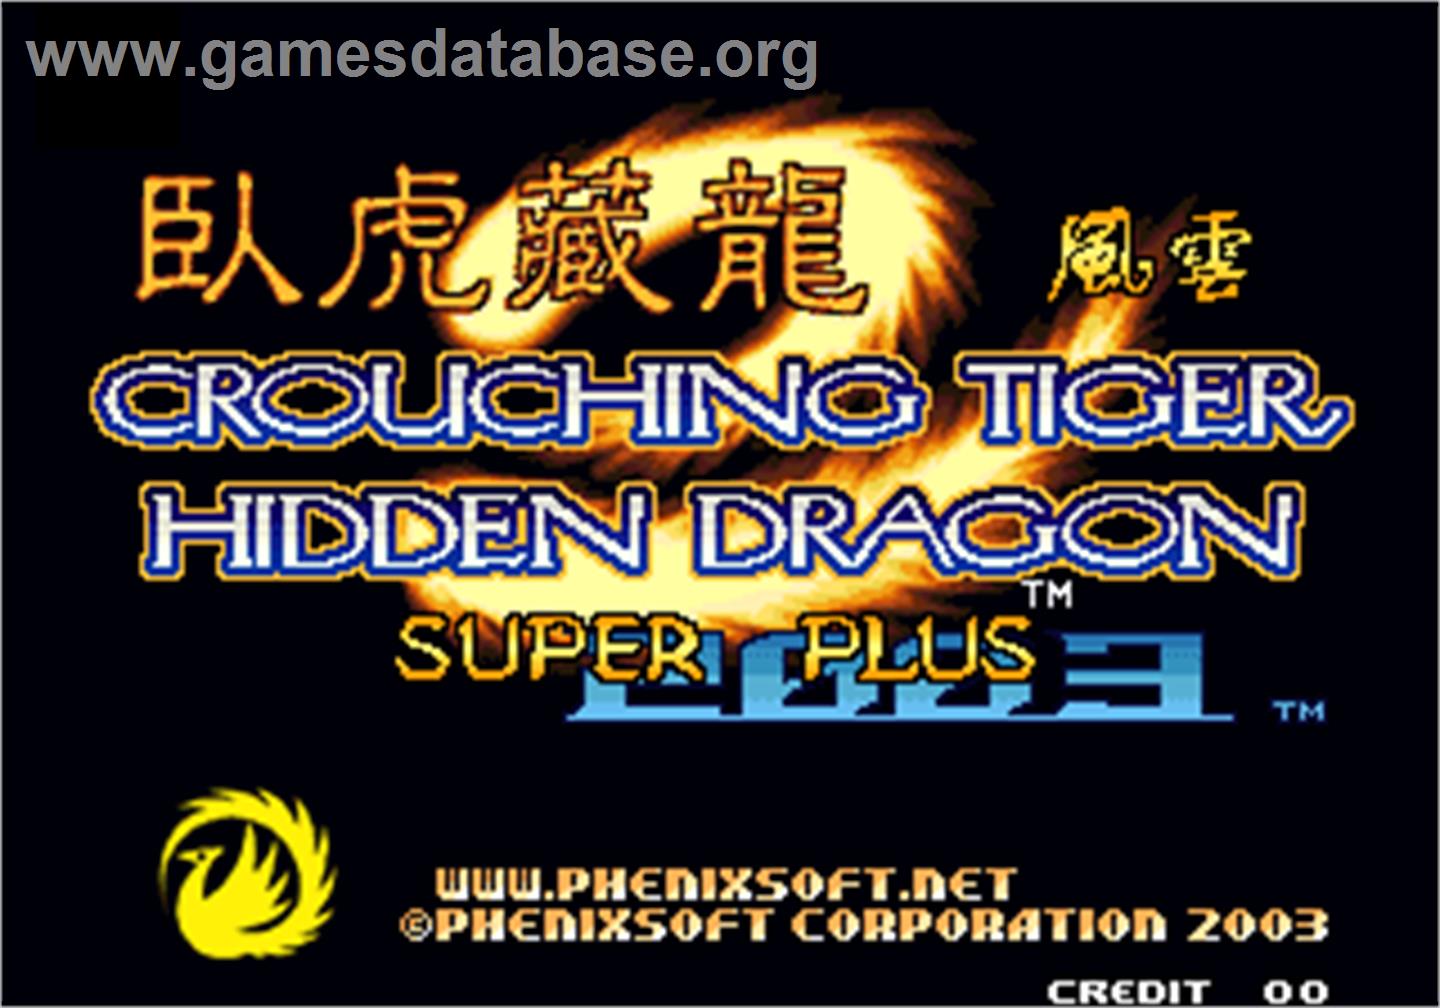 Crouching Tiger Hidden Dragon 2003 Super Plus - Arcade - Artwork - Title Screen